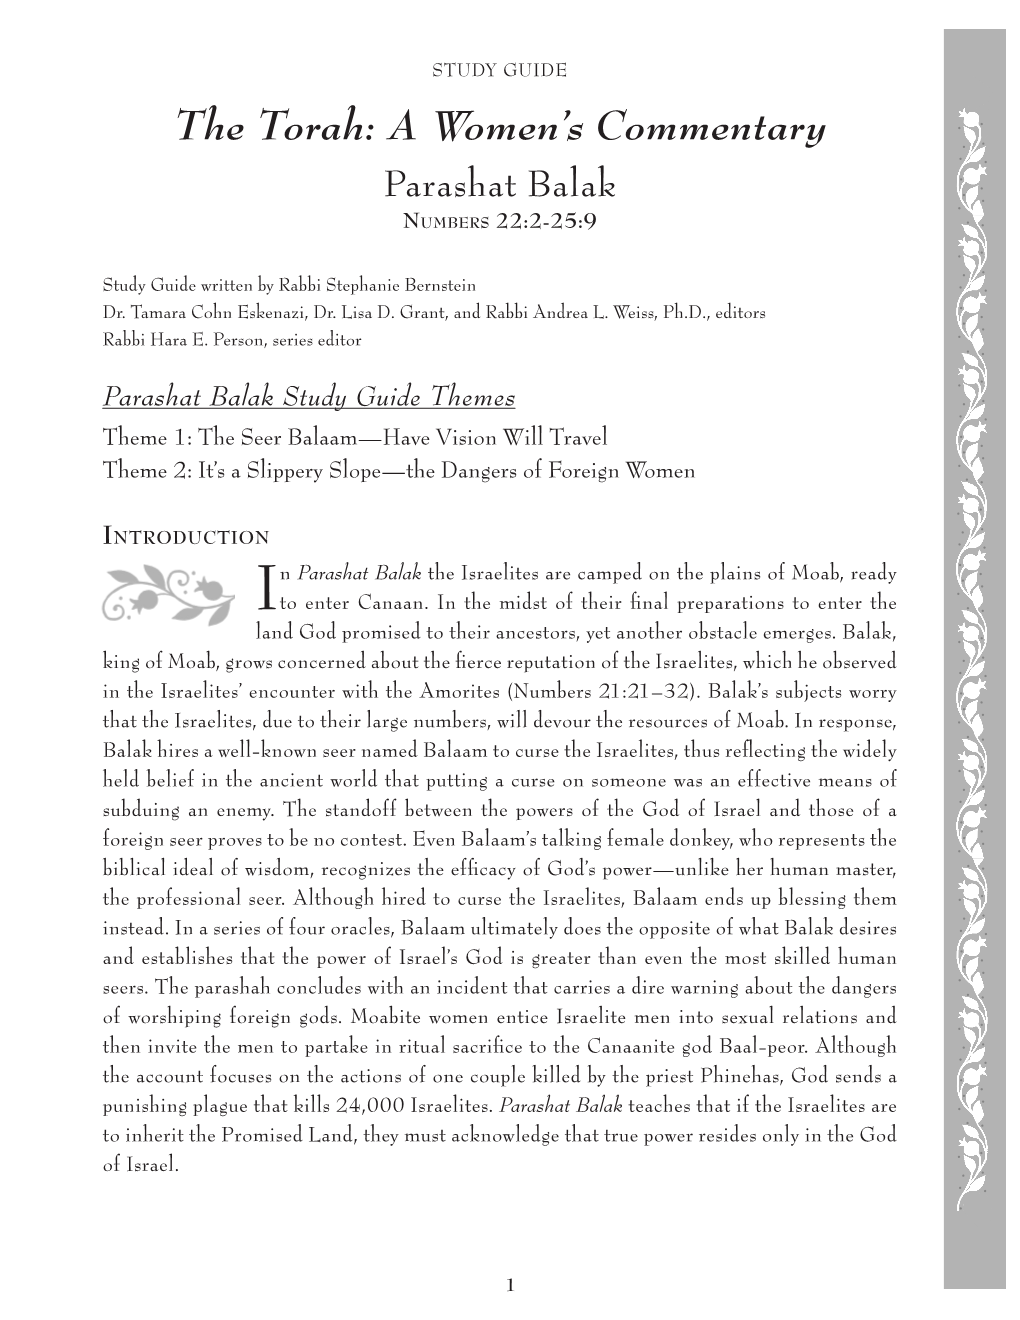 The Torah: a Women's Commentary